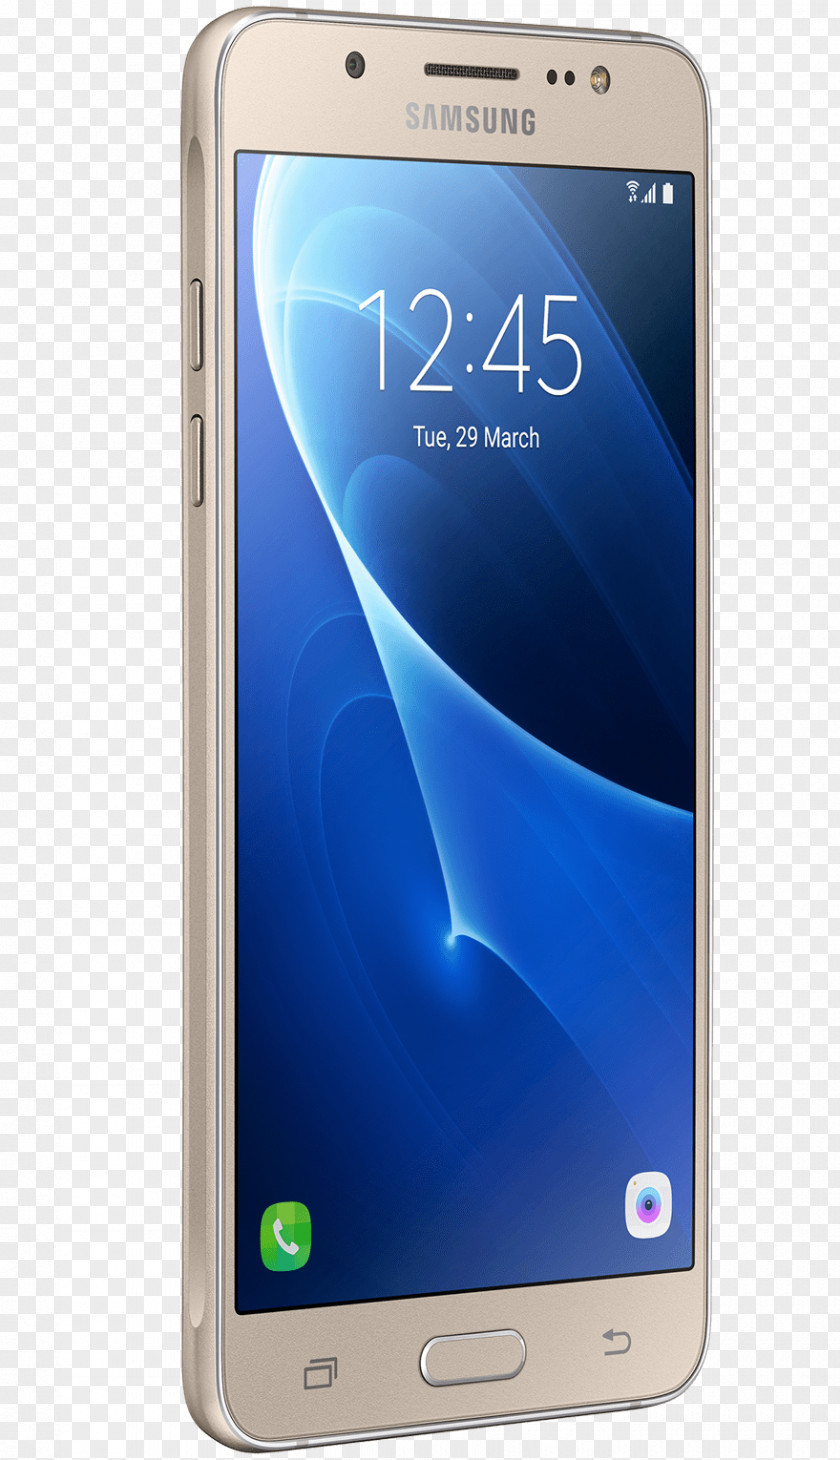 Samsung Galaxy J5 (2016) J7 Smartphone PNG